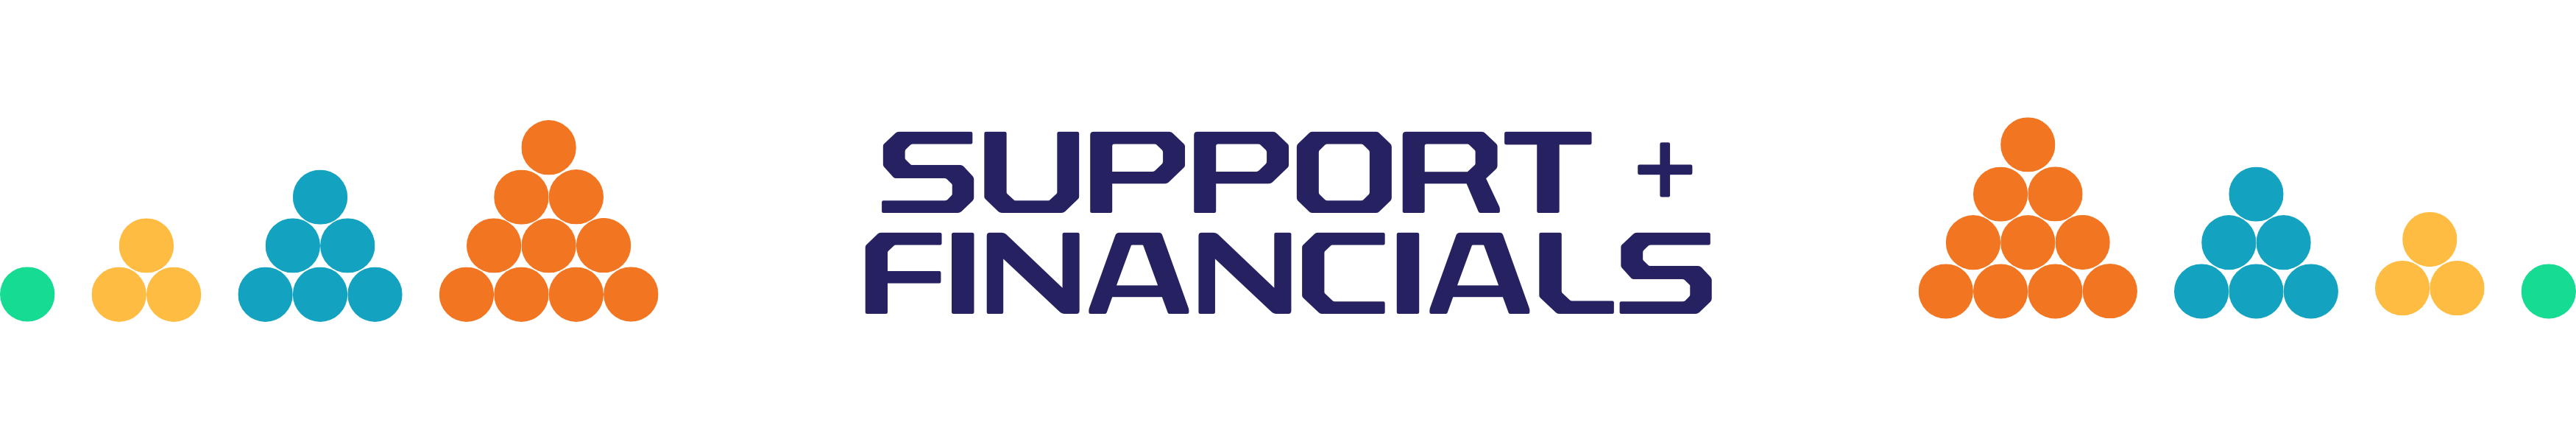 Support + Financials